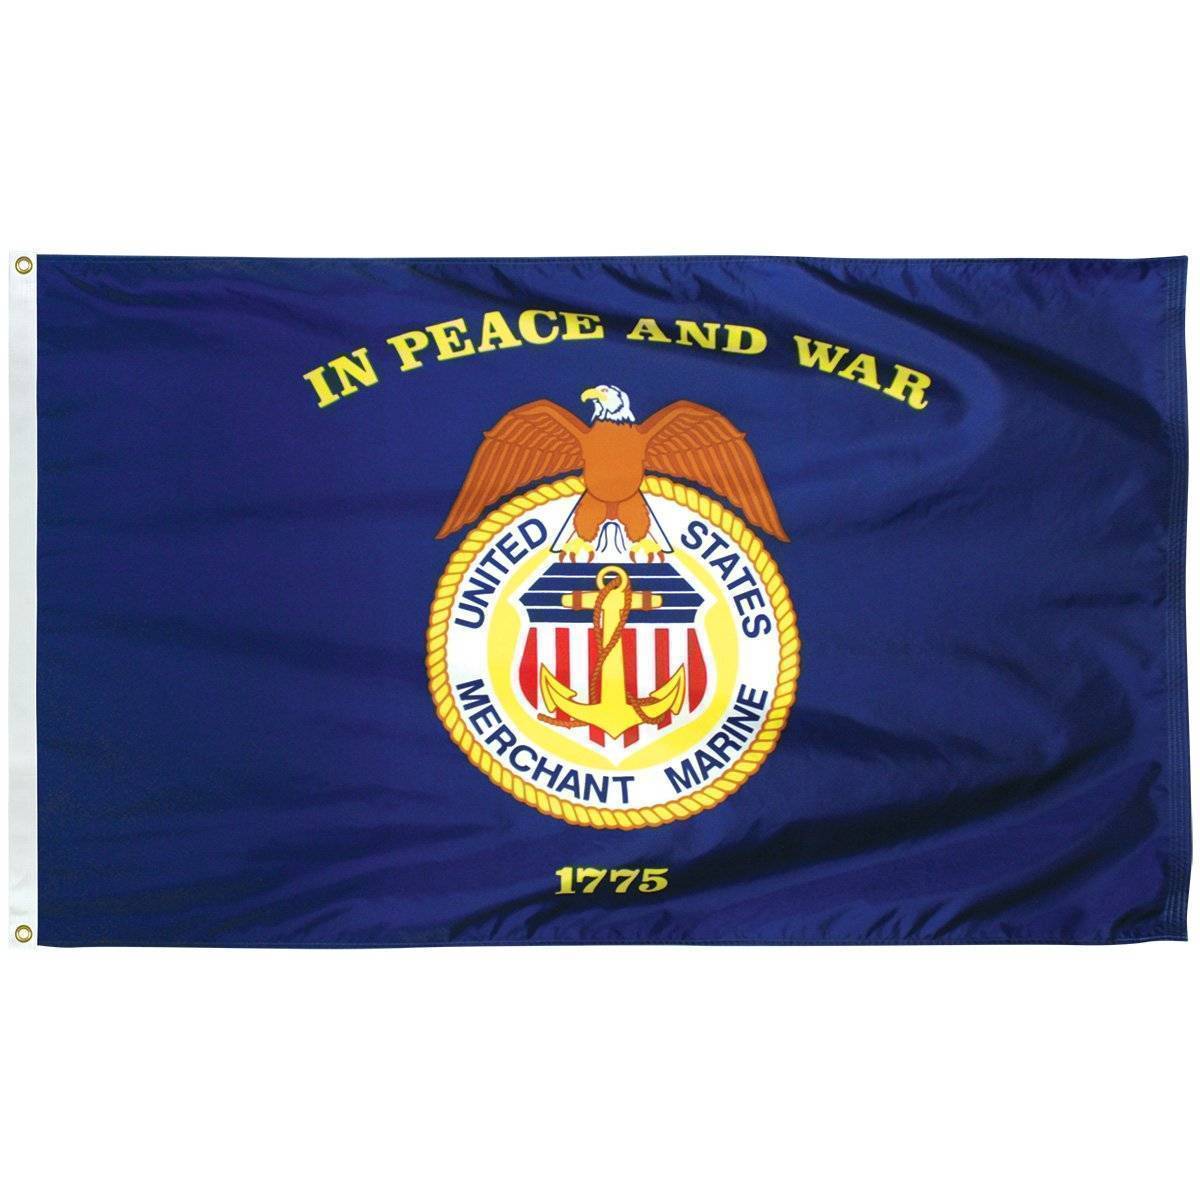 Merchant Marine Flag Outdoor Nylon Made in USA.